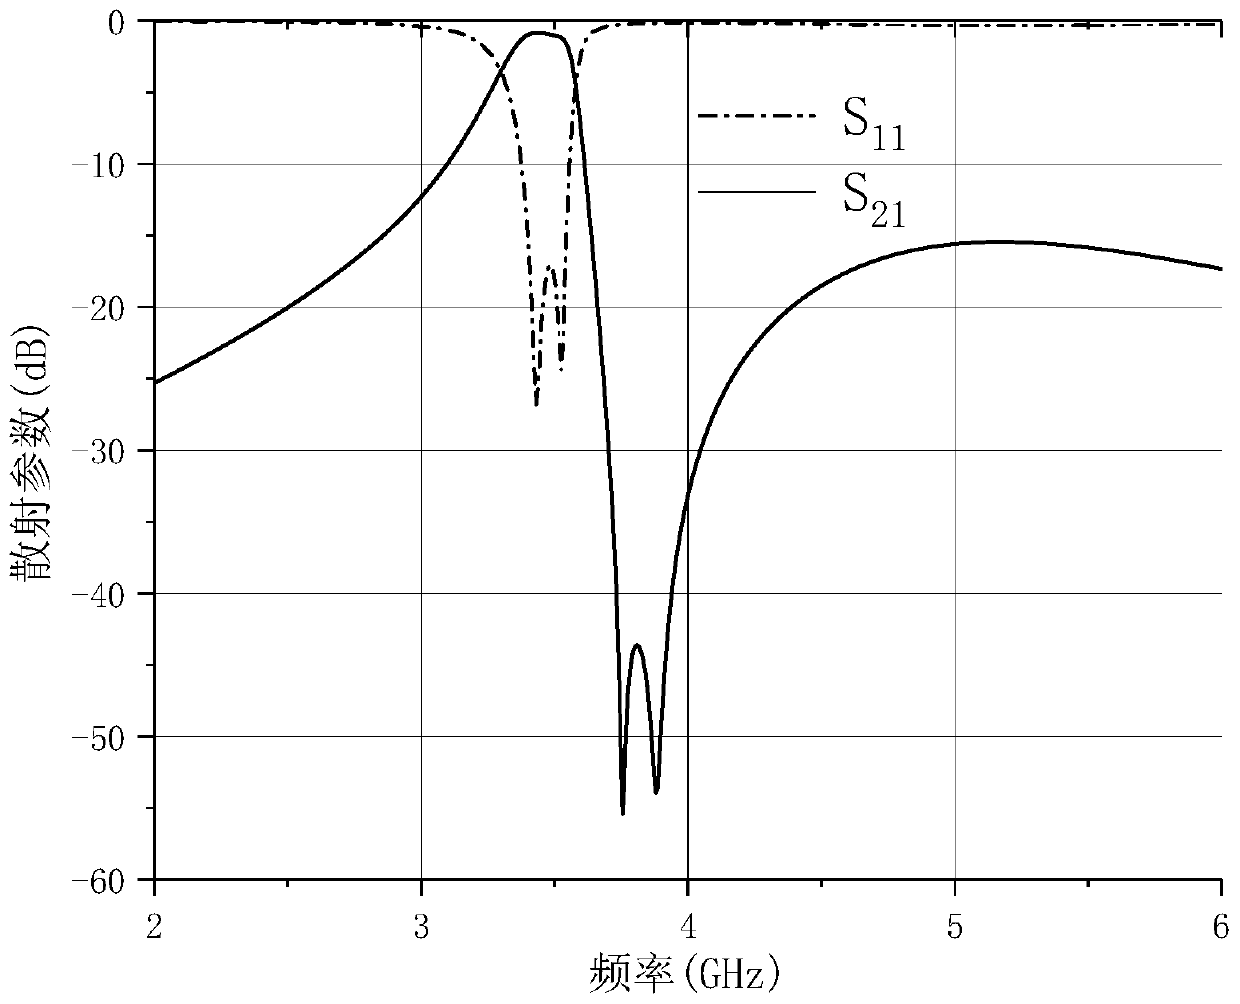 Tri-band planar filter based on multi-mode resonators